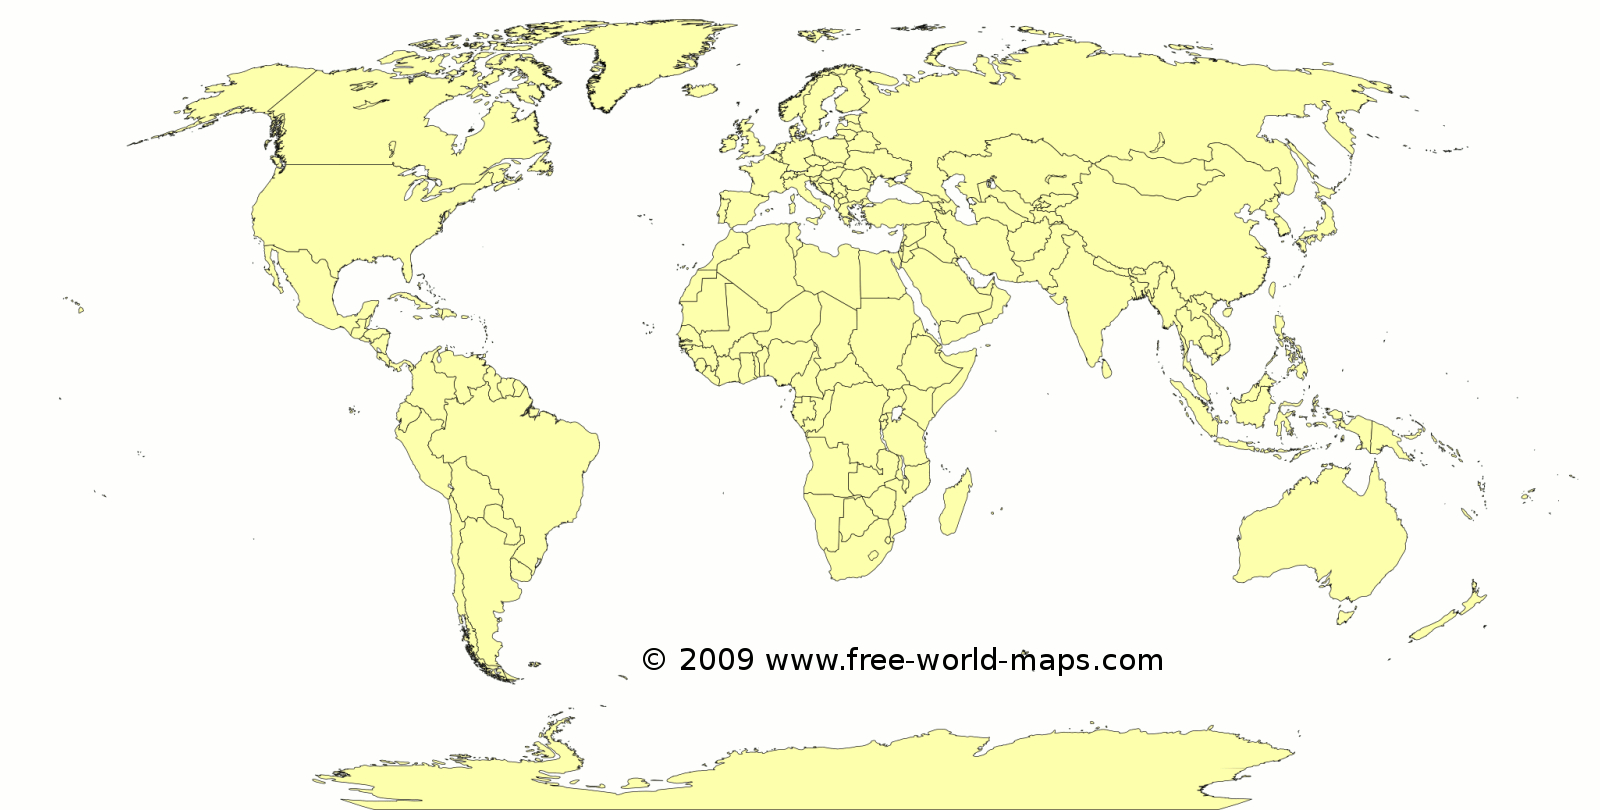 Printable Blank World Maps | Free World Maps - Free Printable World Maps Online